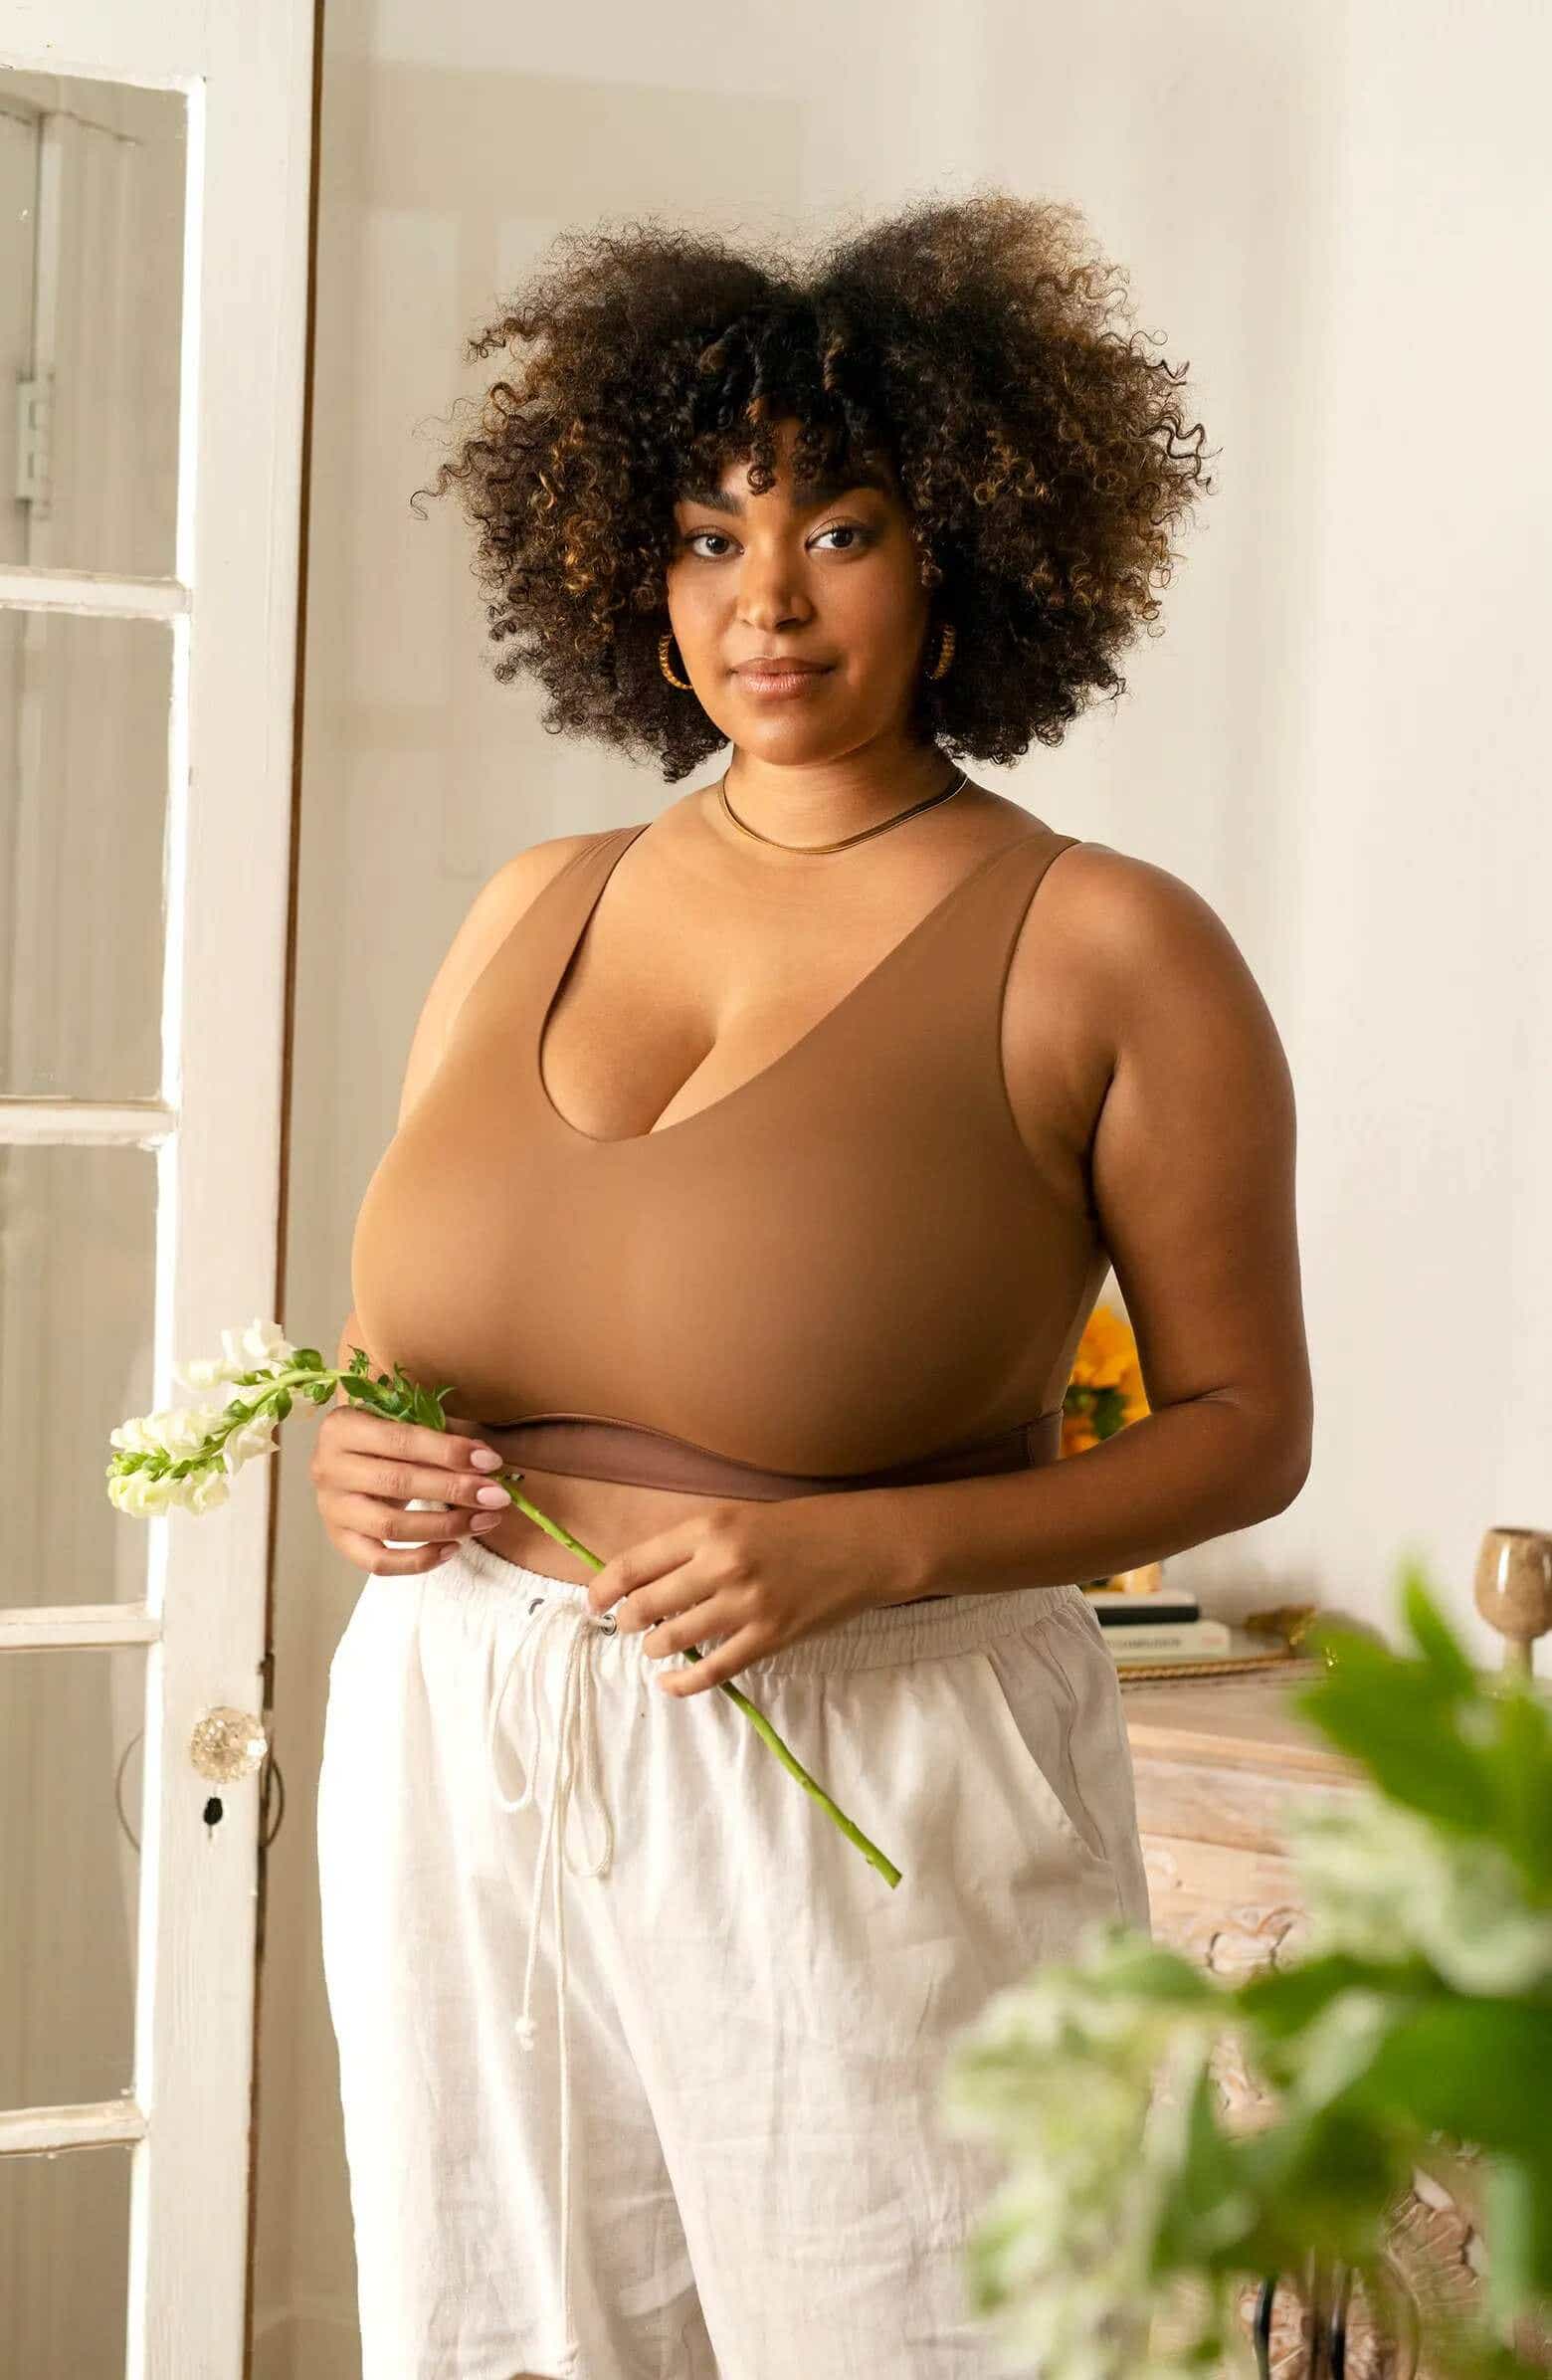 ashraf said recommends mature huge boobs pic